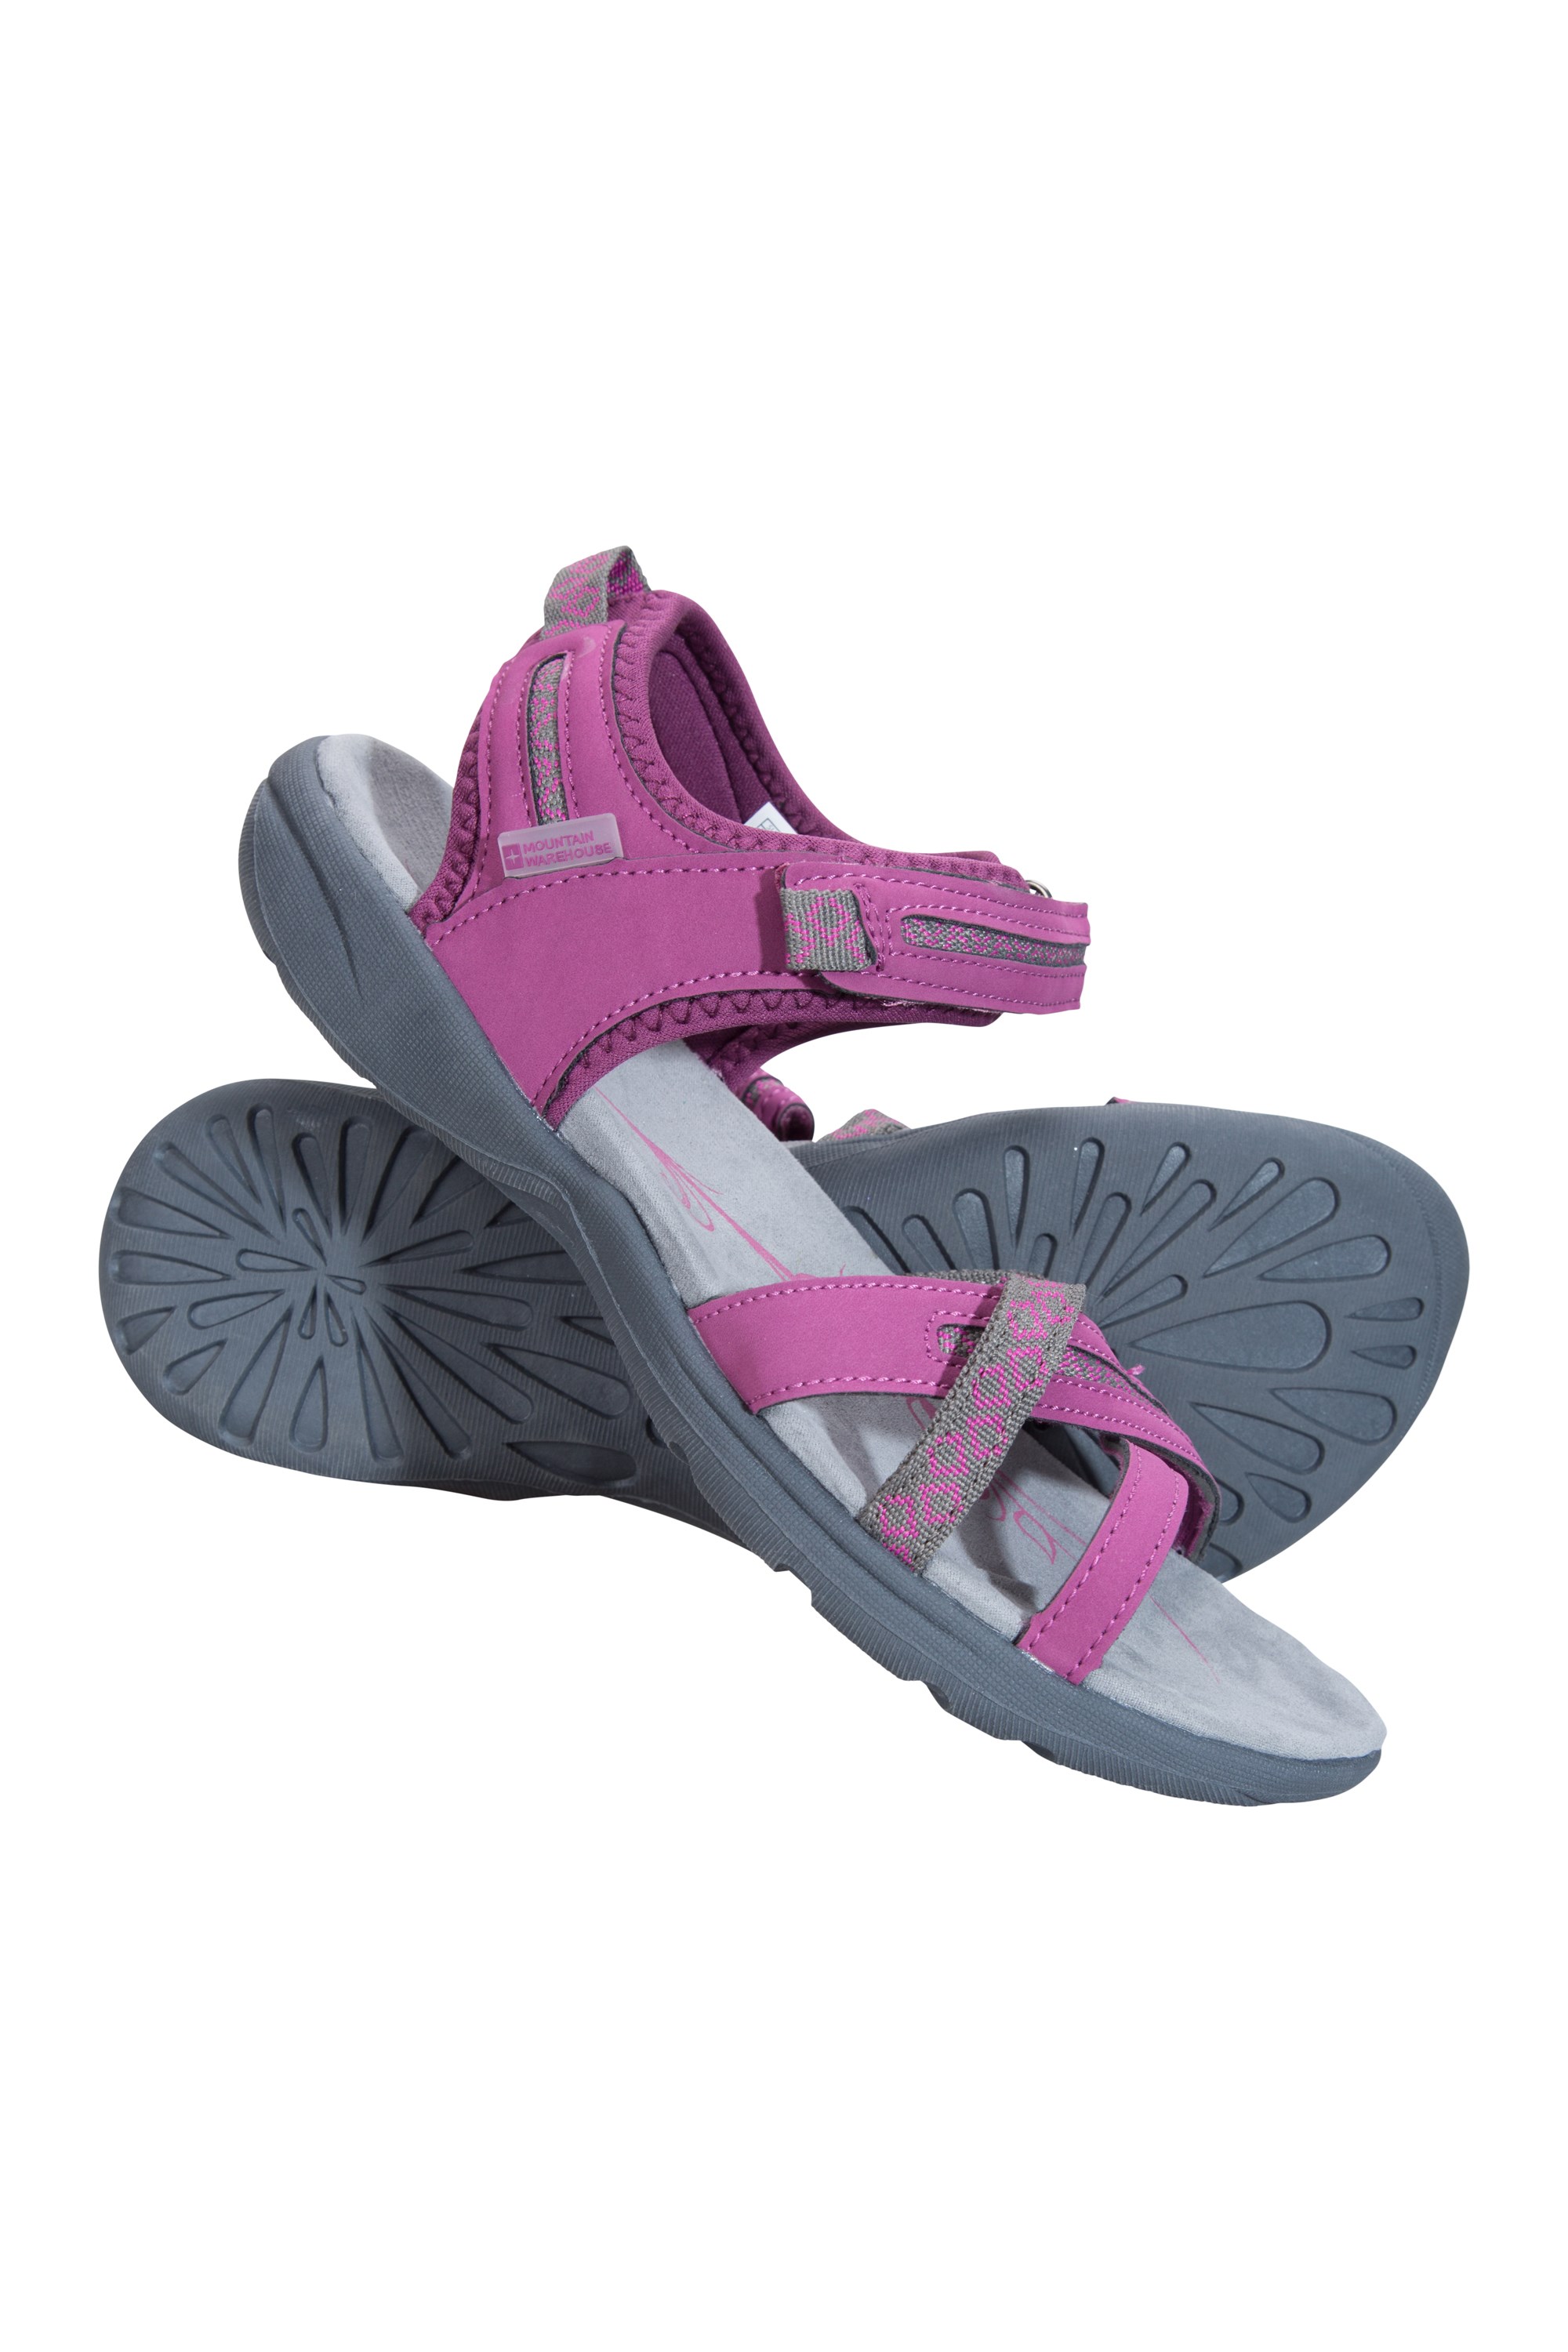 Mountain Warehouse Summertime Womens Sandals Pink